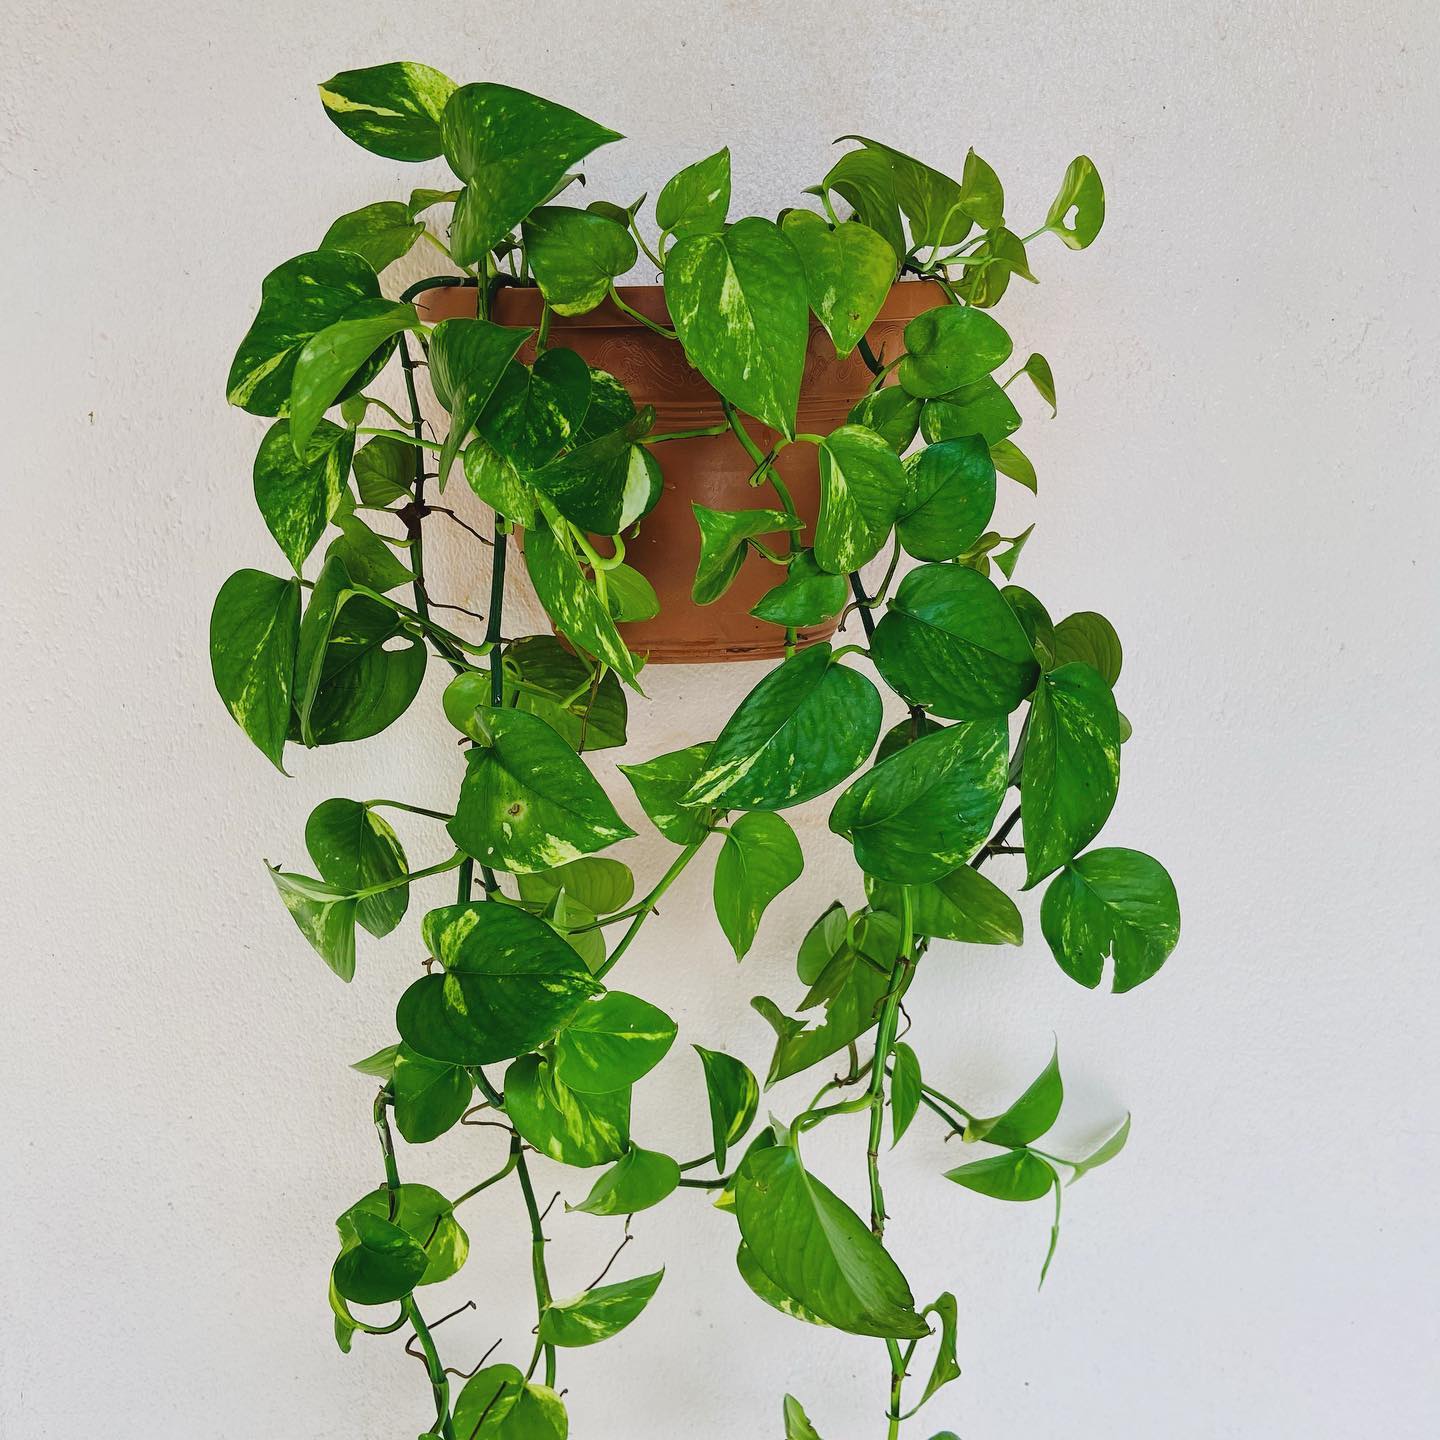 Transform Your Space With Epipremnum Aureum: The Ultimate Versatile Plant!